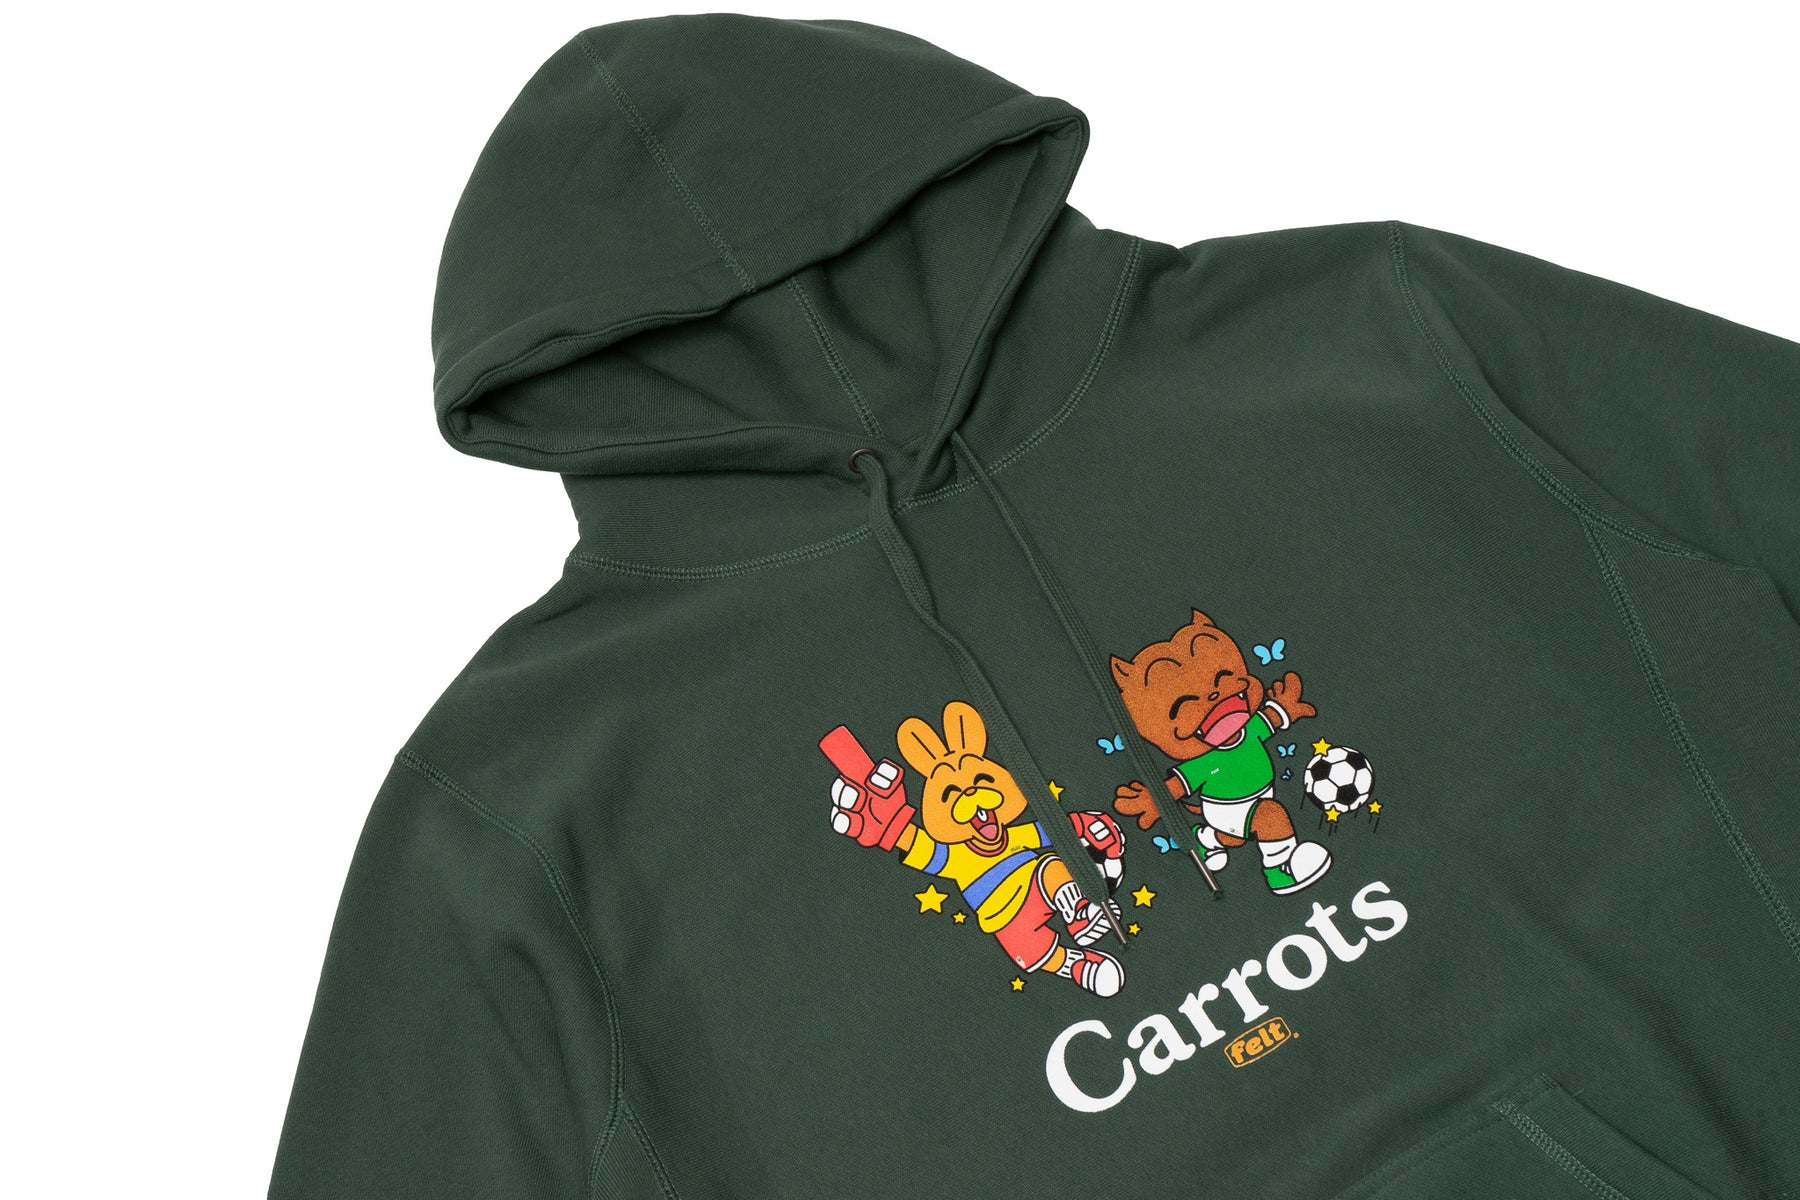 Felt x Carrots Mascot Hoodie "Green"